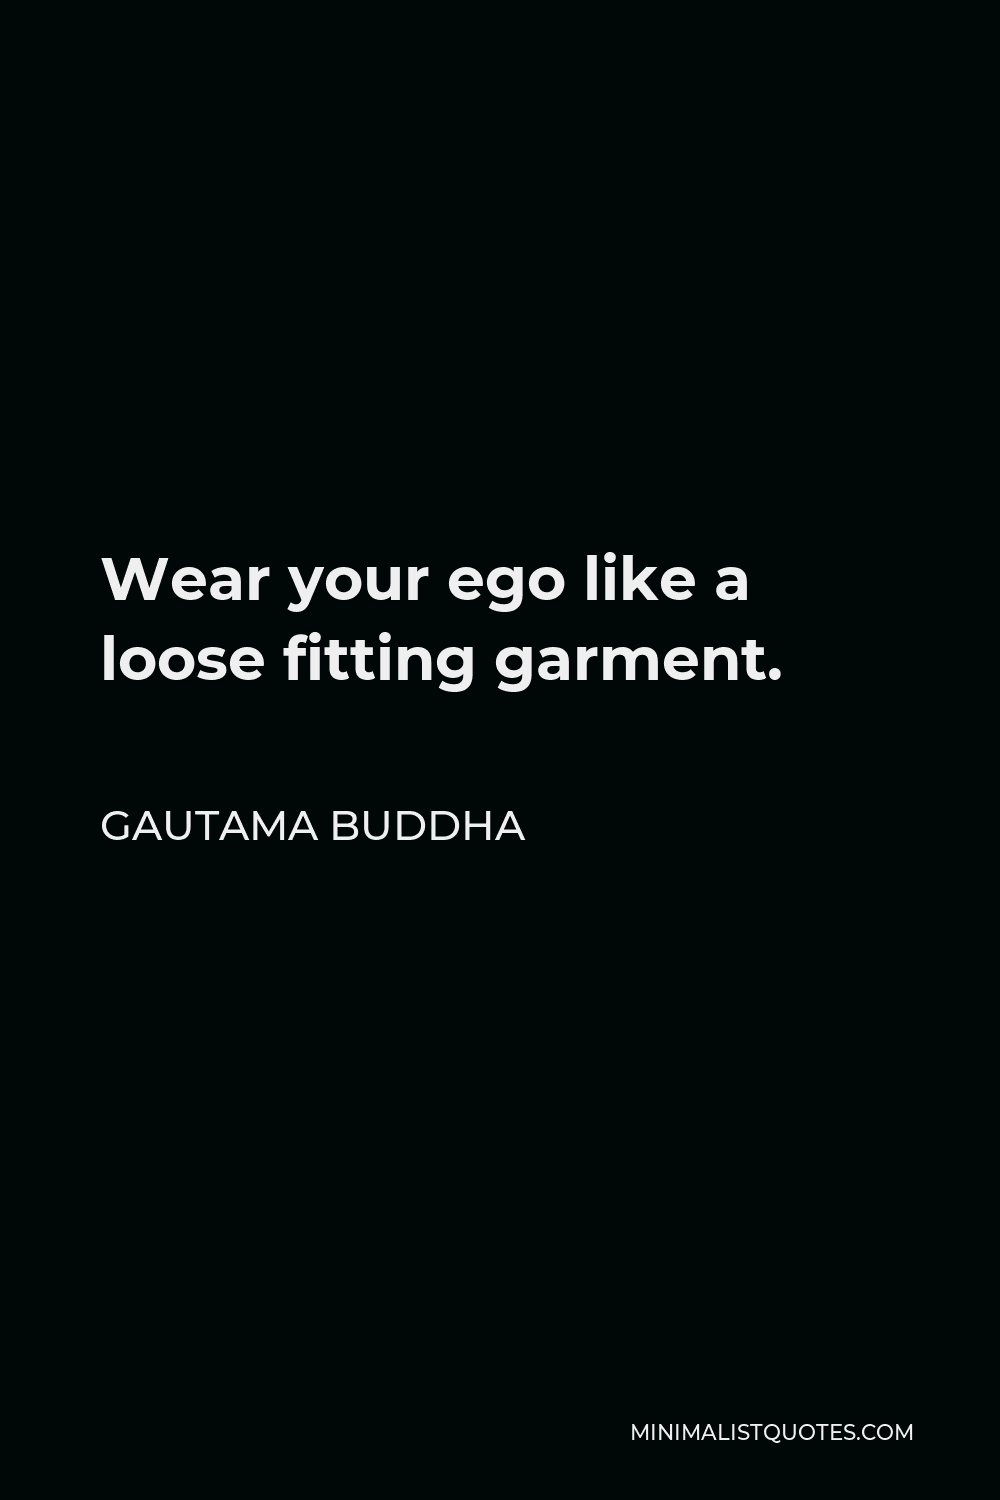 Gautama Buddha Quote - Wear your ego like a loose fitting garment.